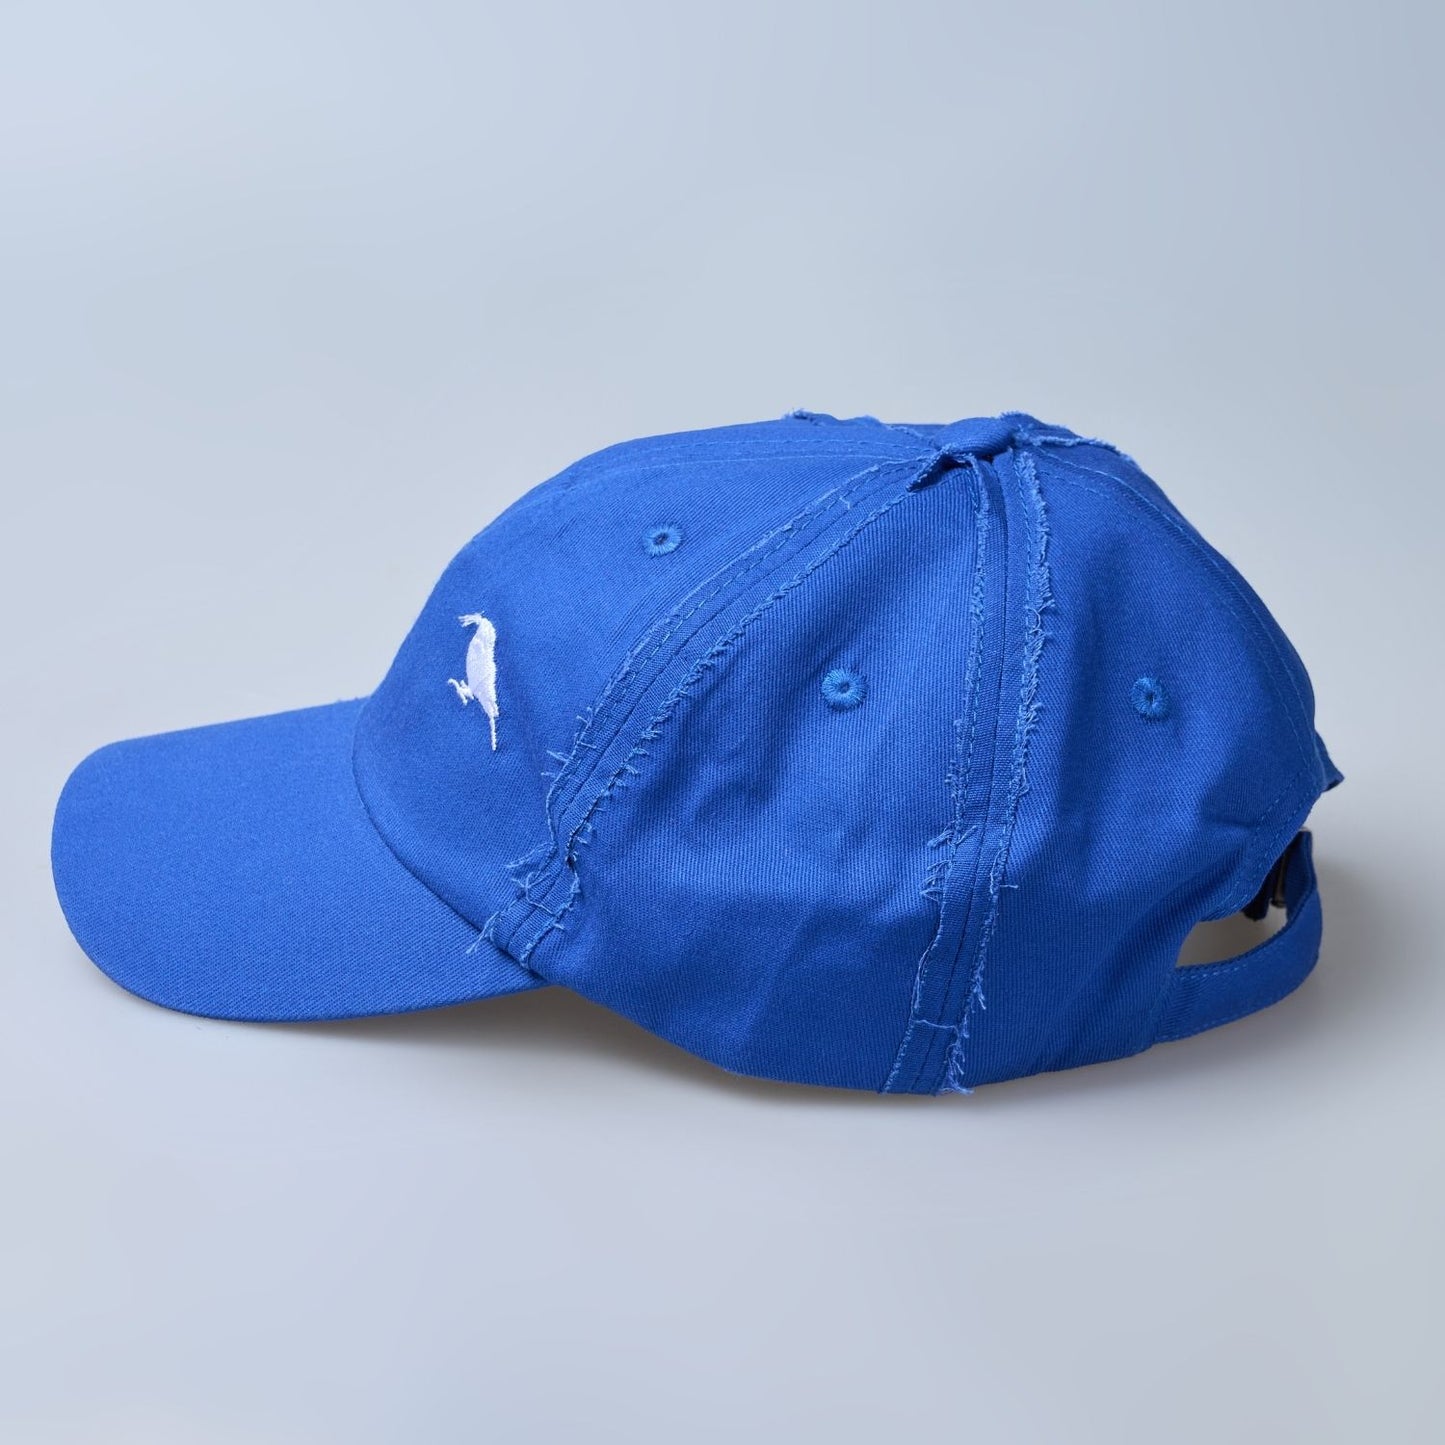 Blue colored, wide brim cap for men with adjustable strap.